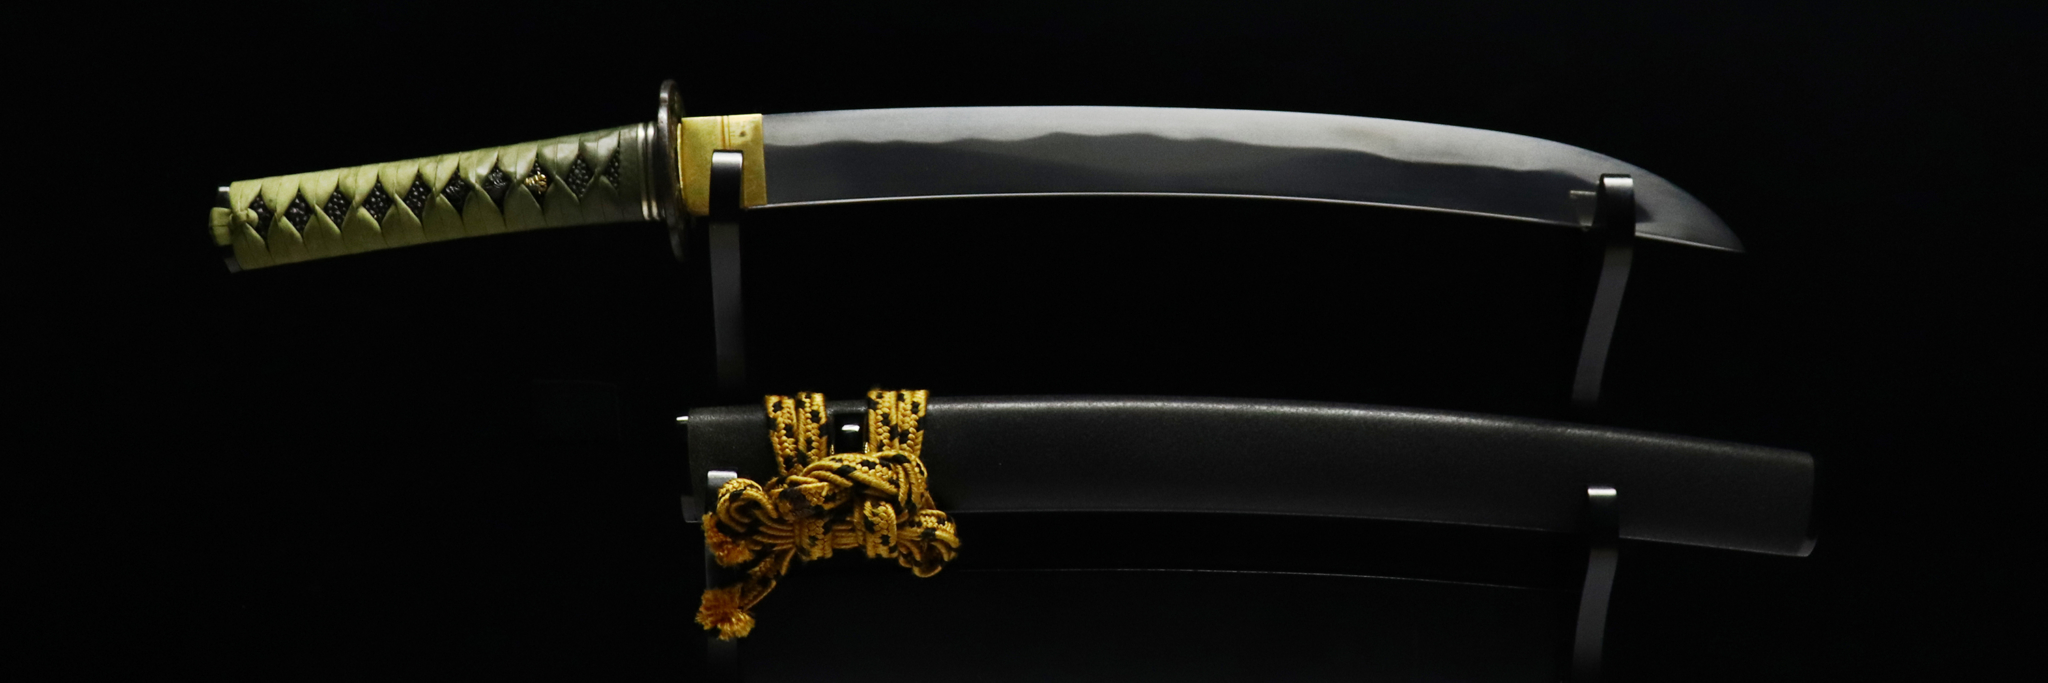 現代刀 | 日本刀販売・刀剣販売の「勇進堂」| Katana Japanese Sword - YUSHINDOU